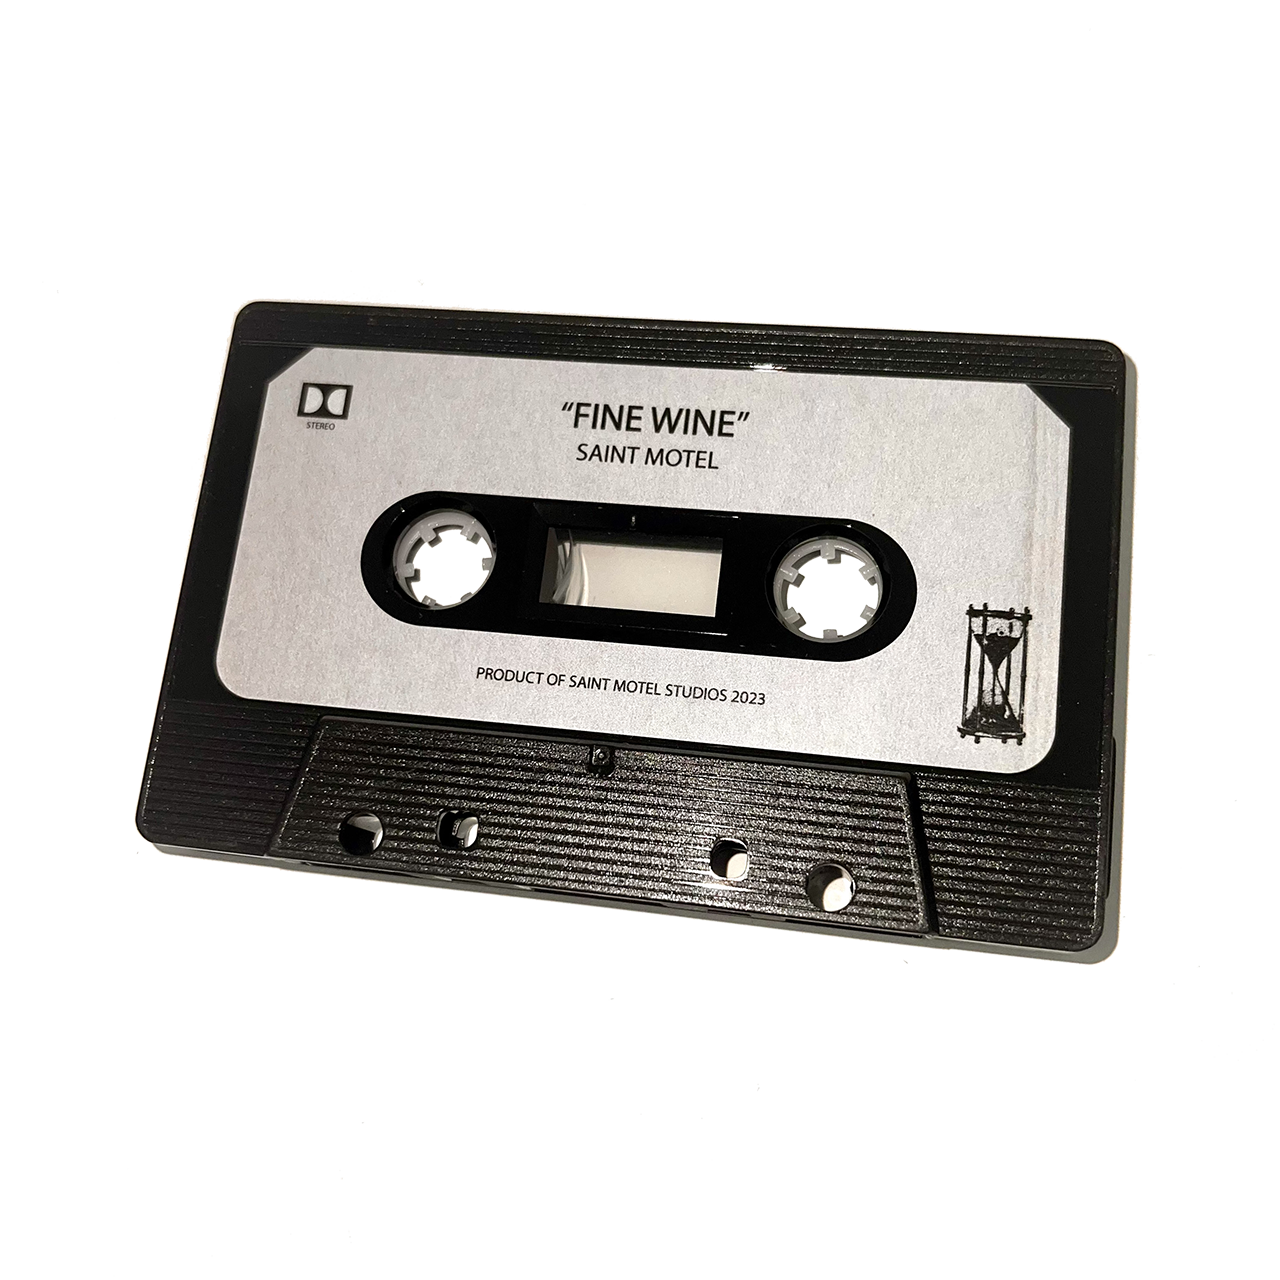 LIMITED EDITION - "Fine Wine" cassette